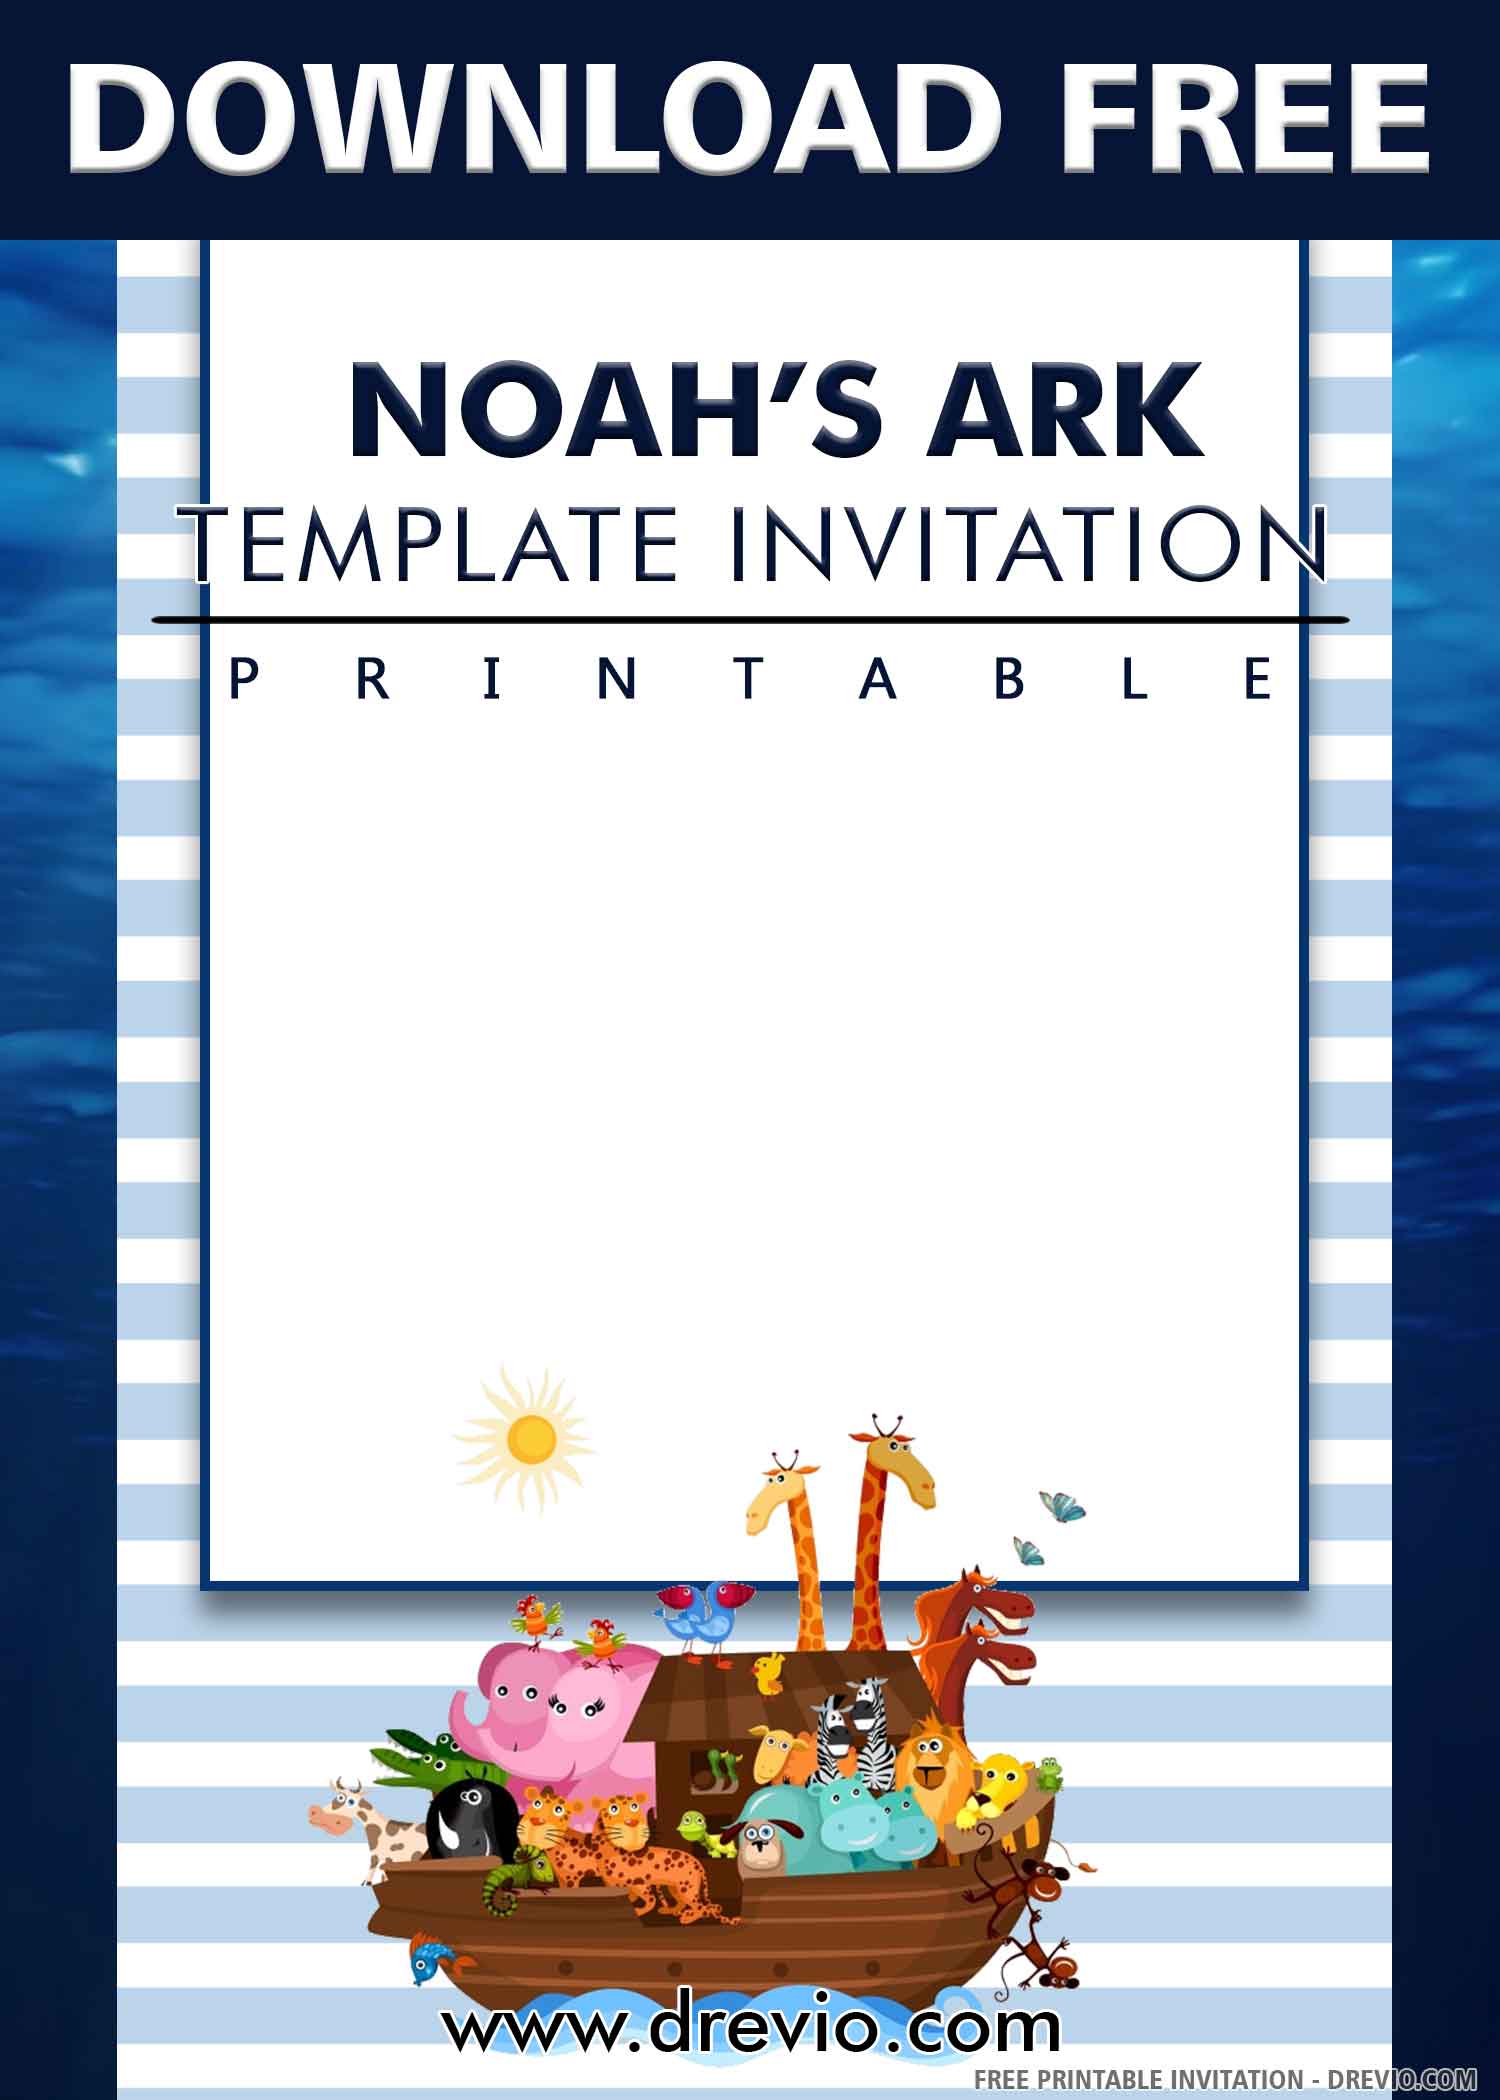 free-printable-noah-s-ark-birthday-invitation-templates-drevio